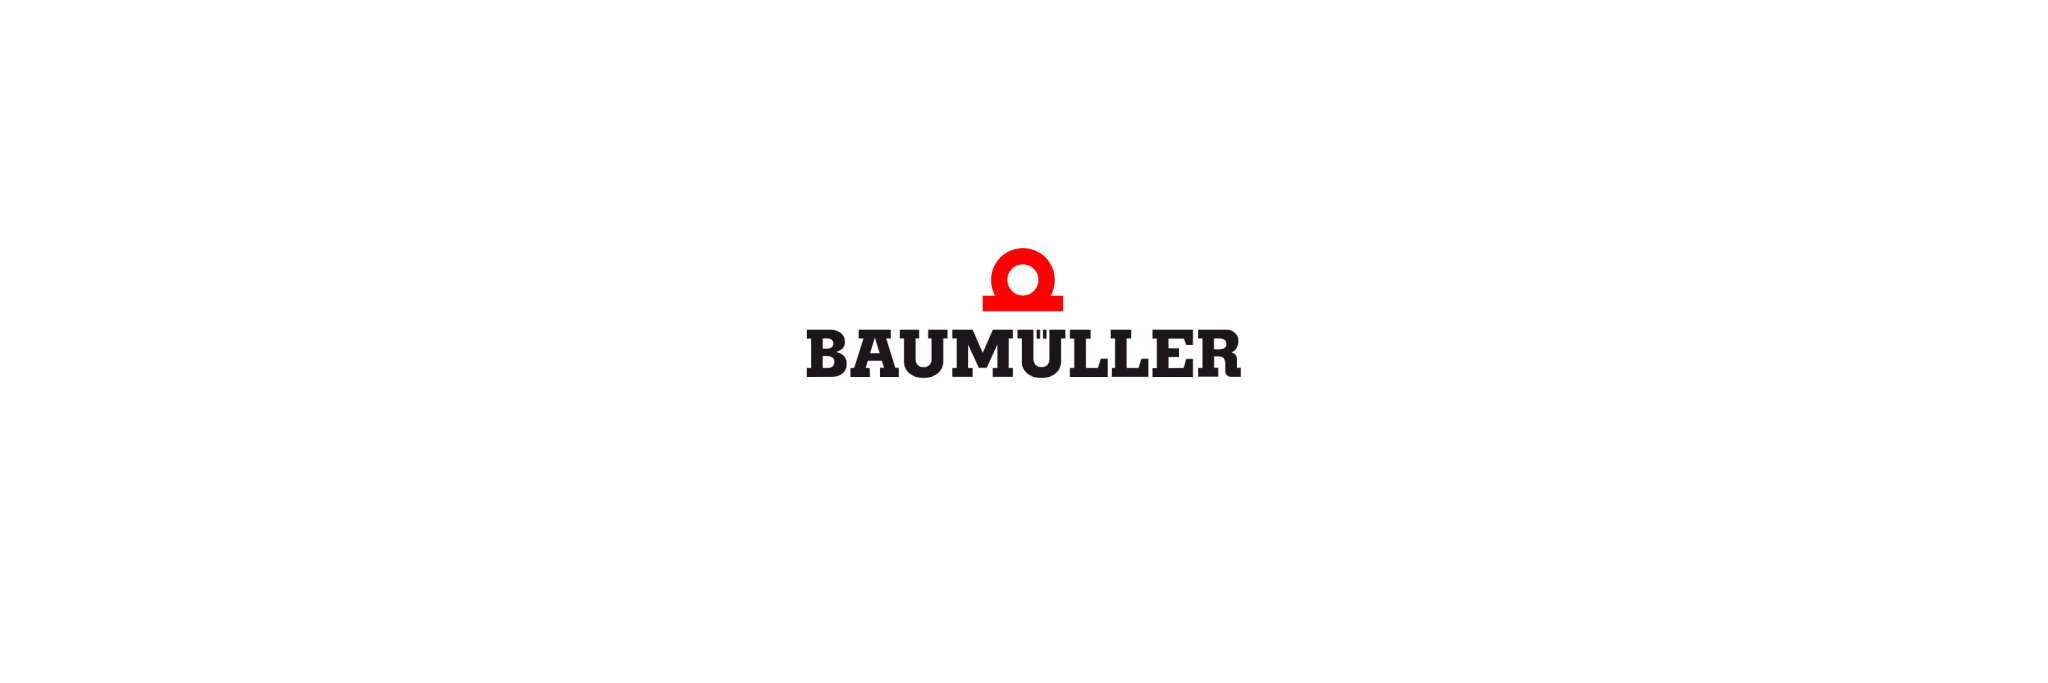 Baumüller - Klenk Maschinenhandel